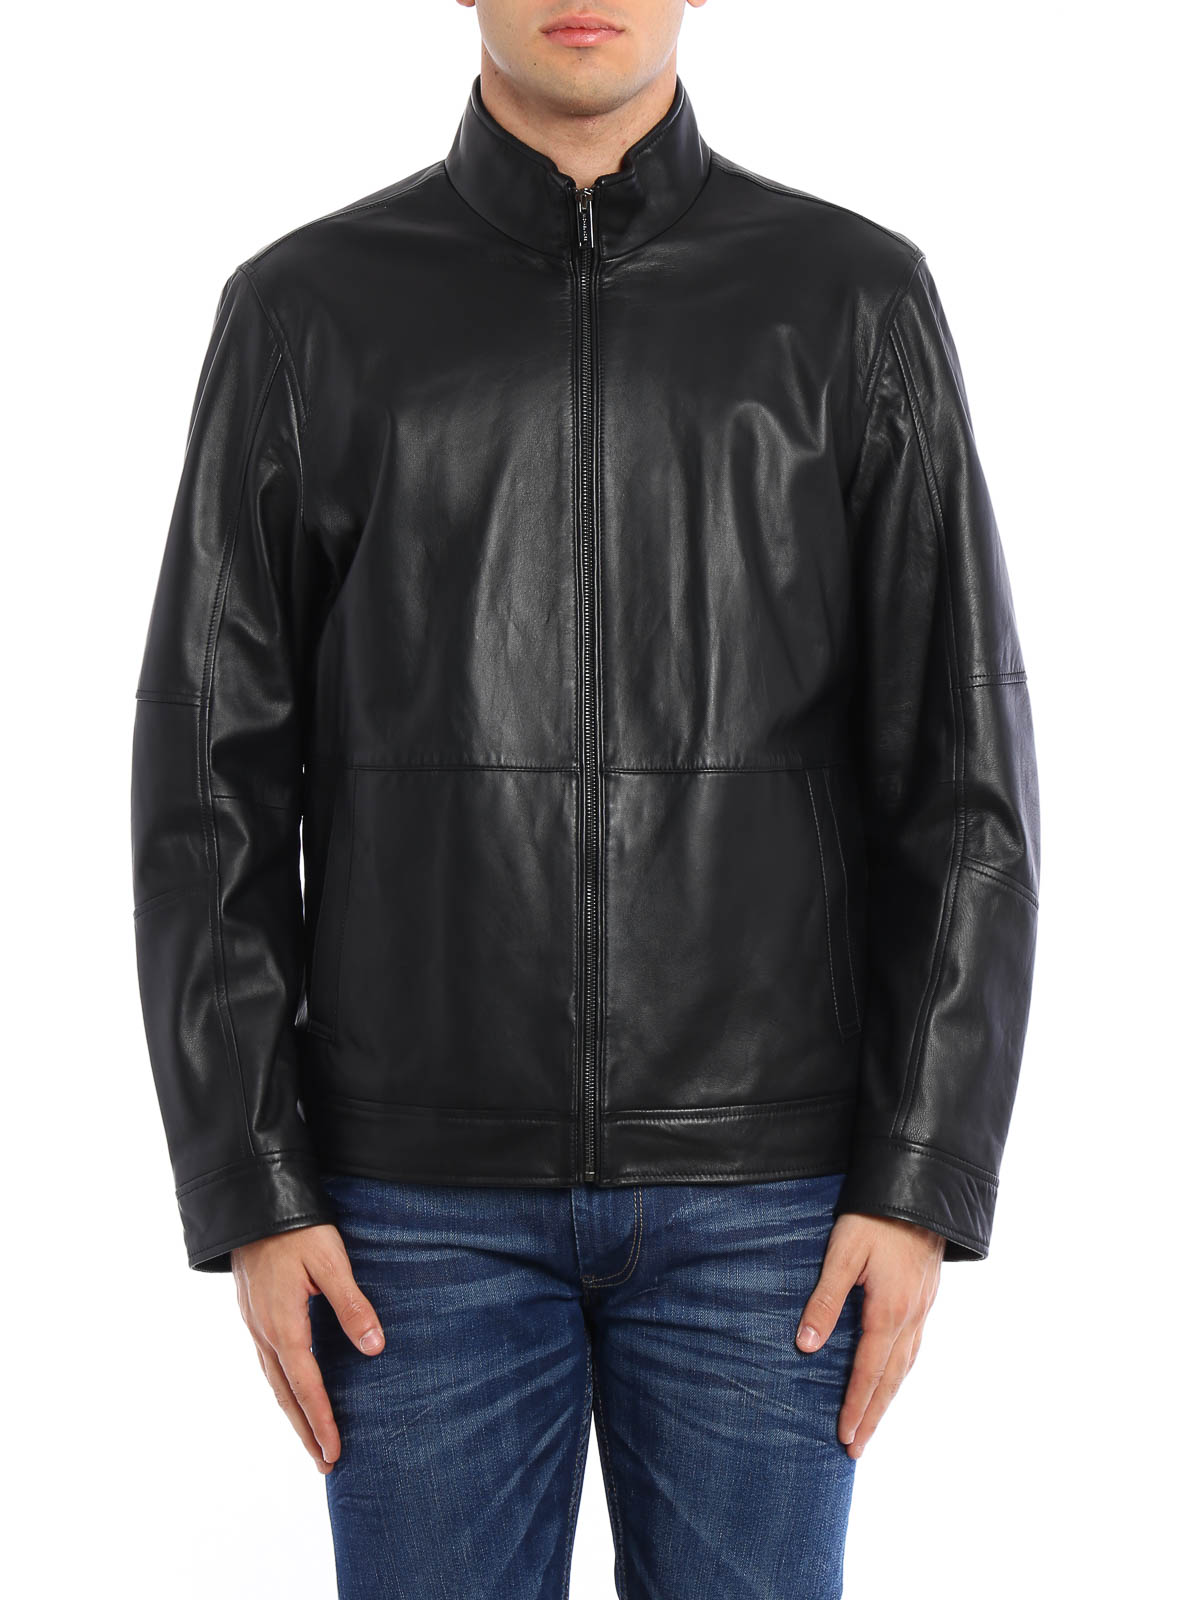 Leather jacket Michael Kors - Smooth nappa leather jacket - CF68C920WT001